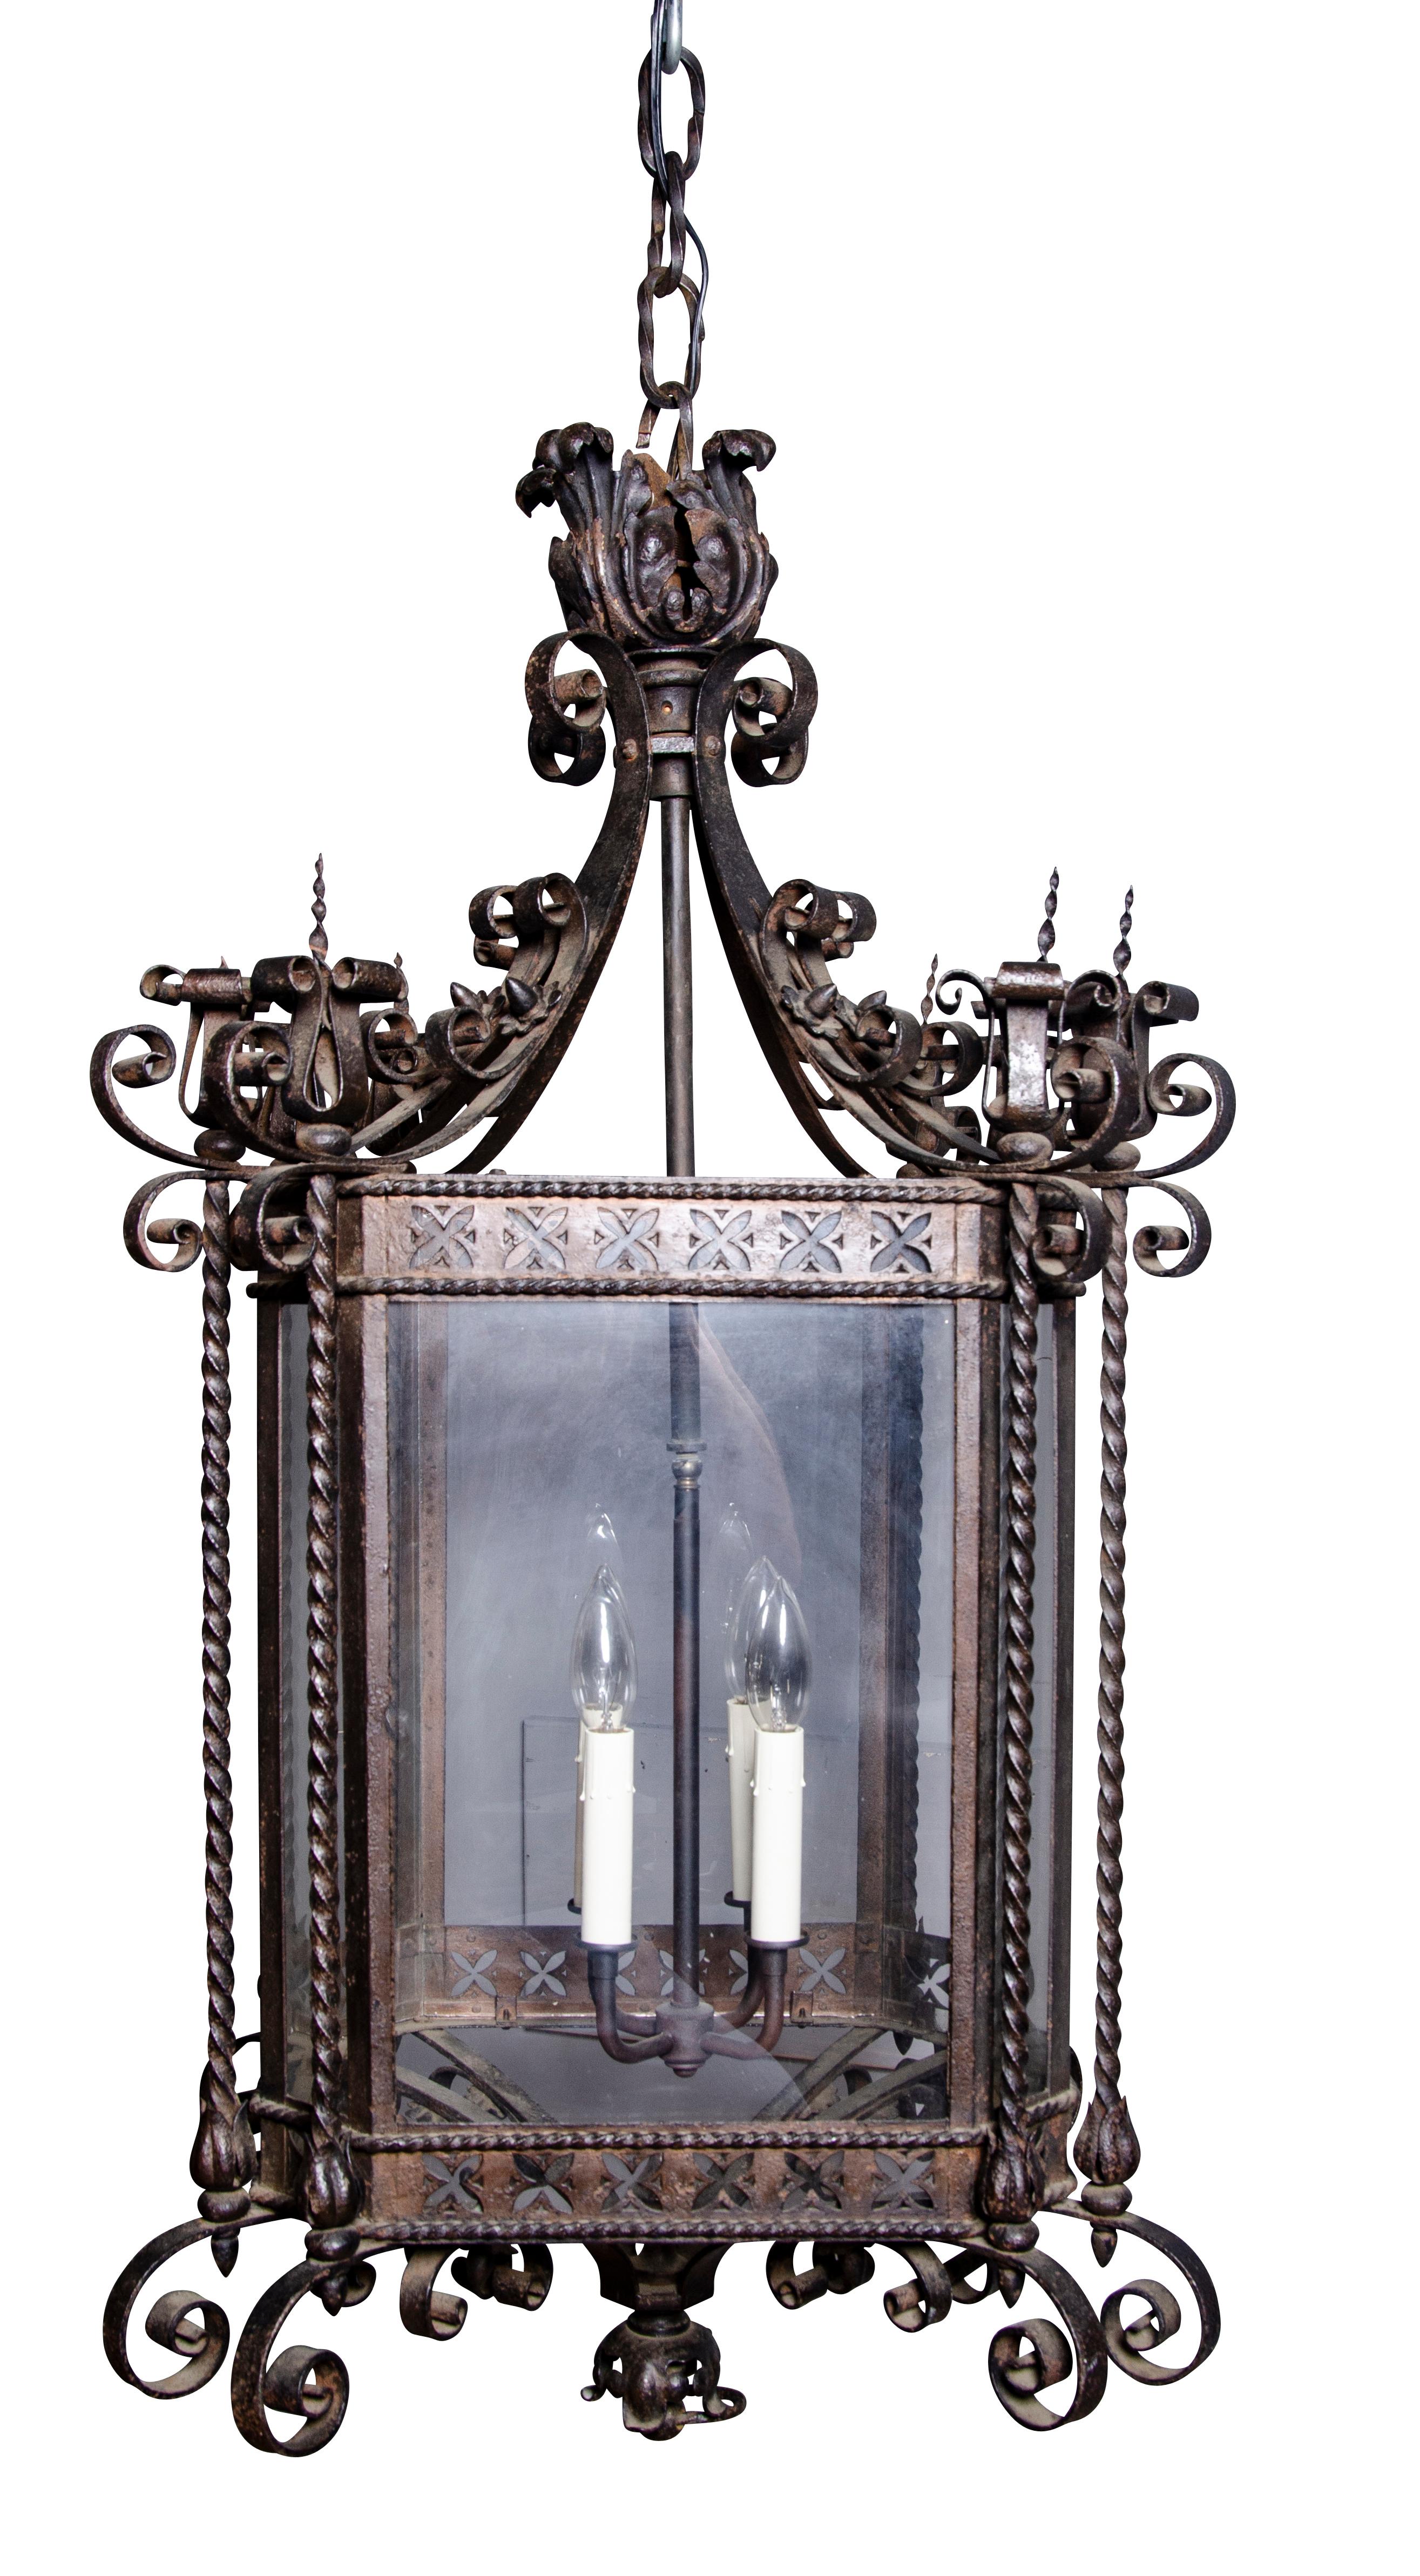 Renaissance Revival Wrought Iron Hall Lantern For Sale